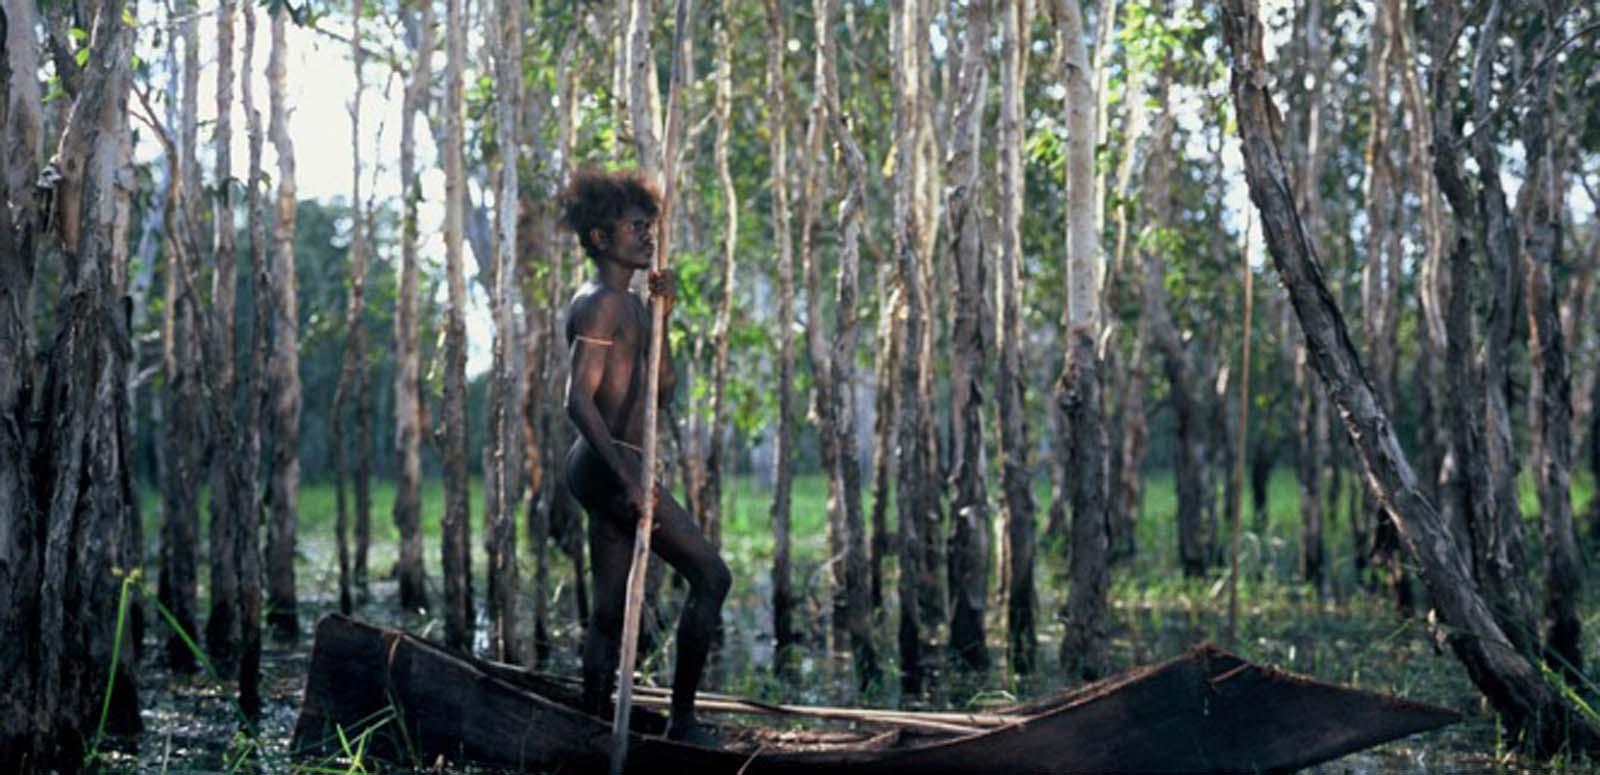 Jamie Gulpilil stands in a canoe in an Arnhem Land swamp